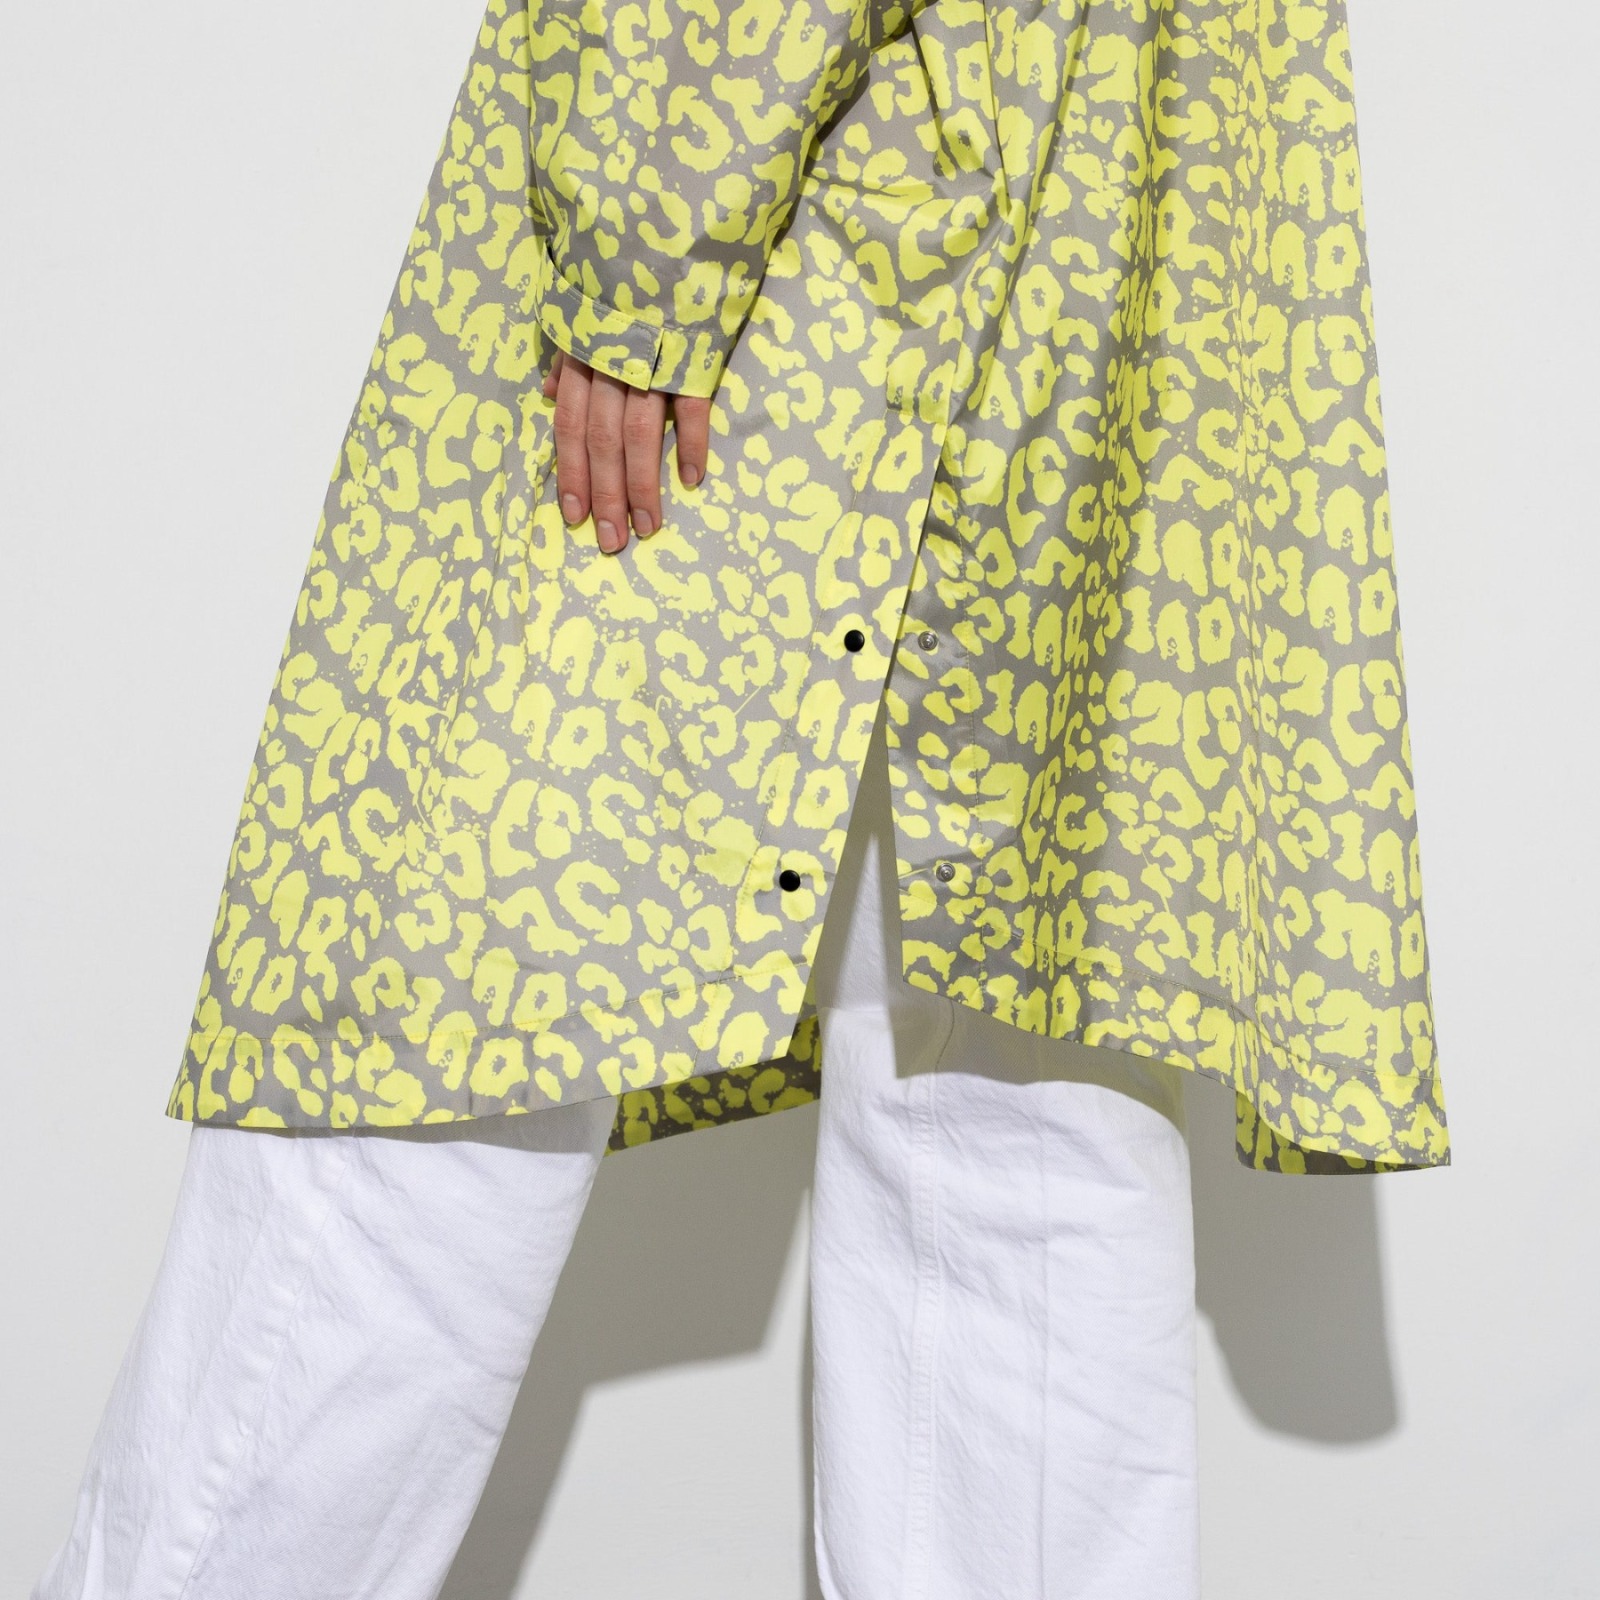 VIVI MARI - Raincoat leo splashes yellow/grey 9